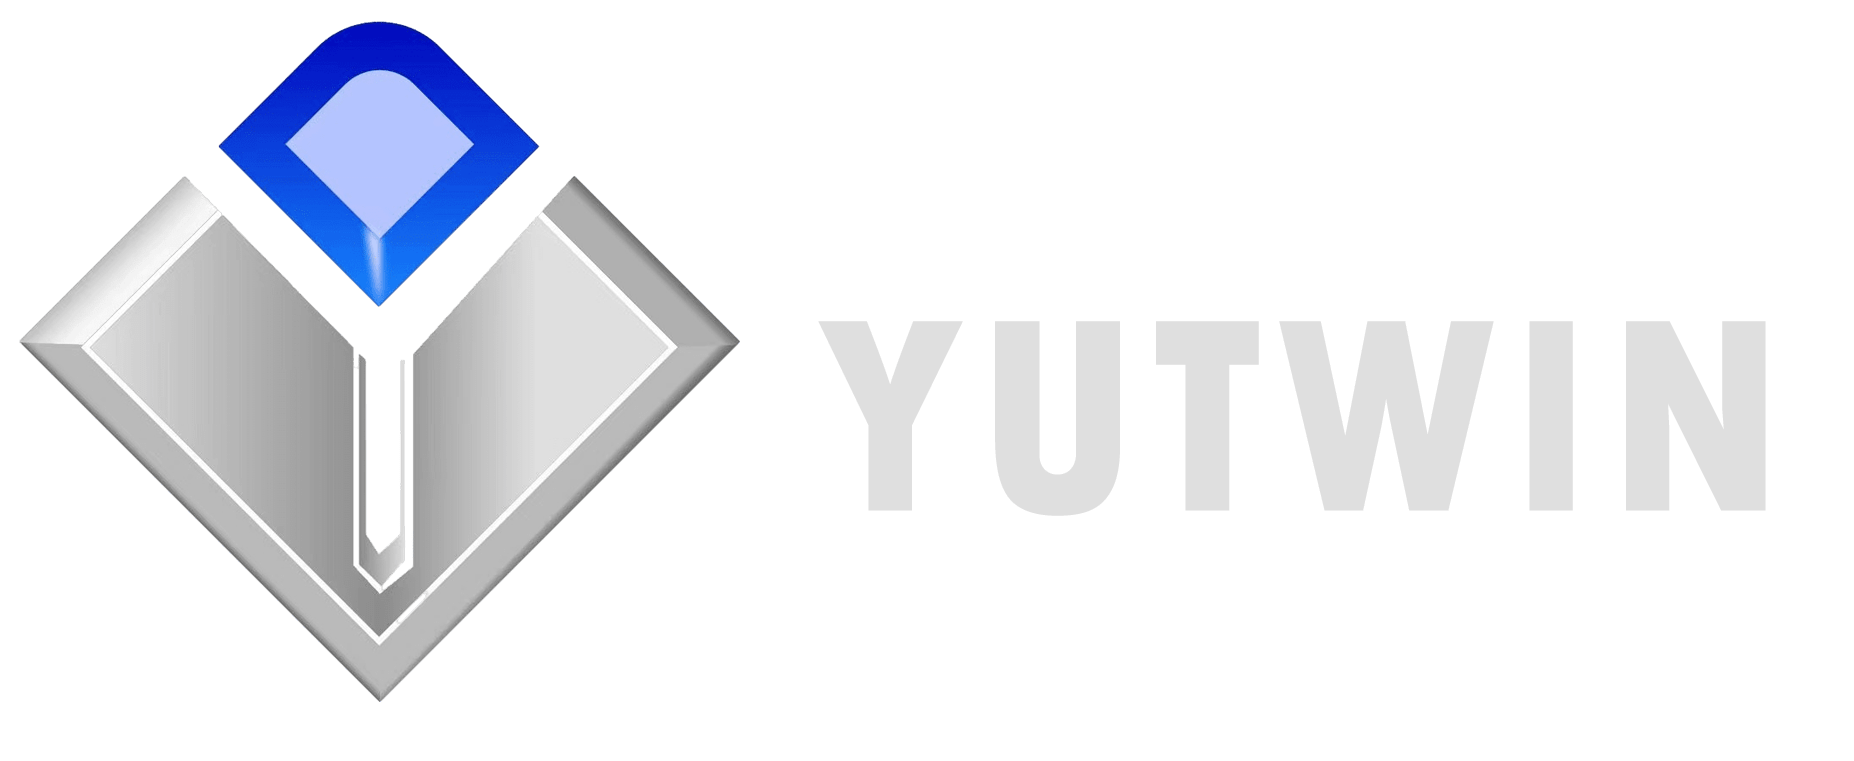 Yutwin novos logotipos de materails